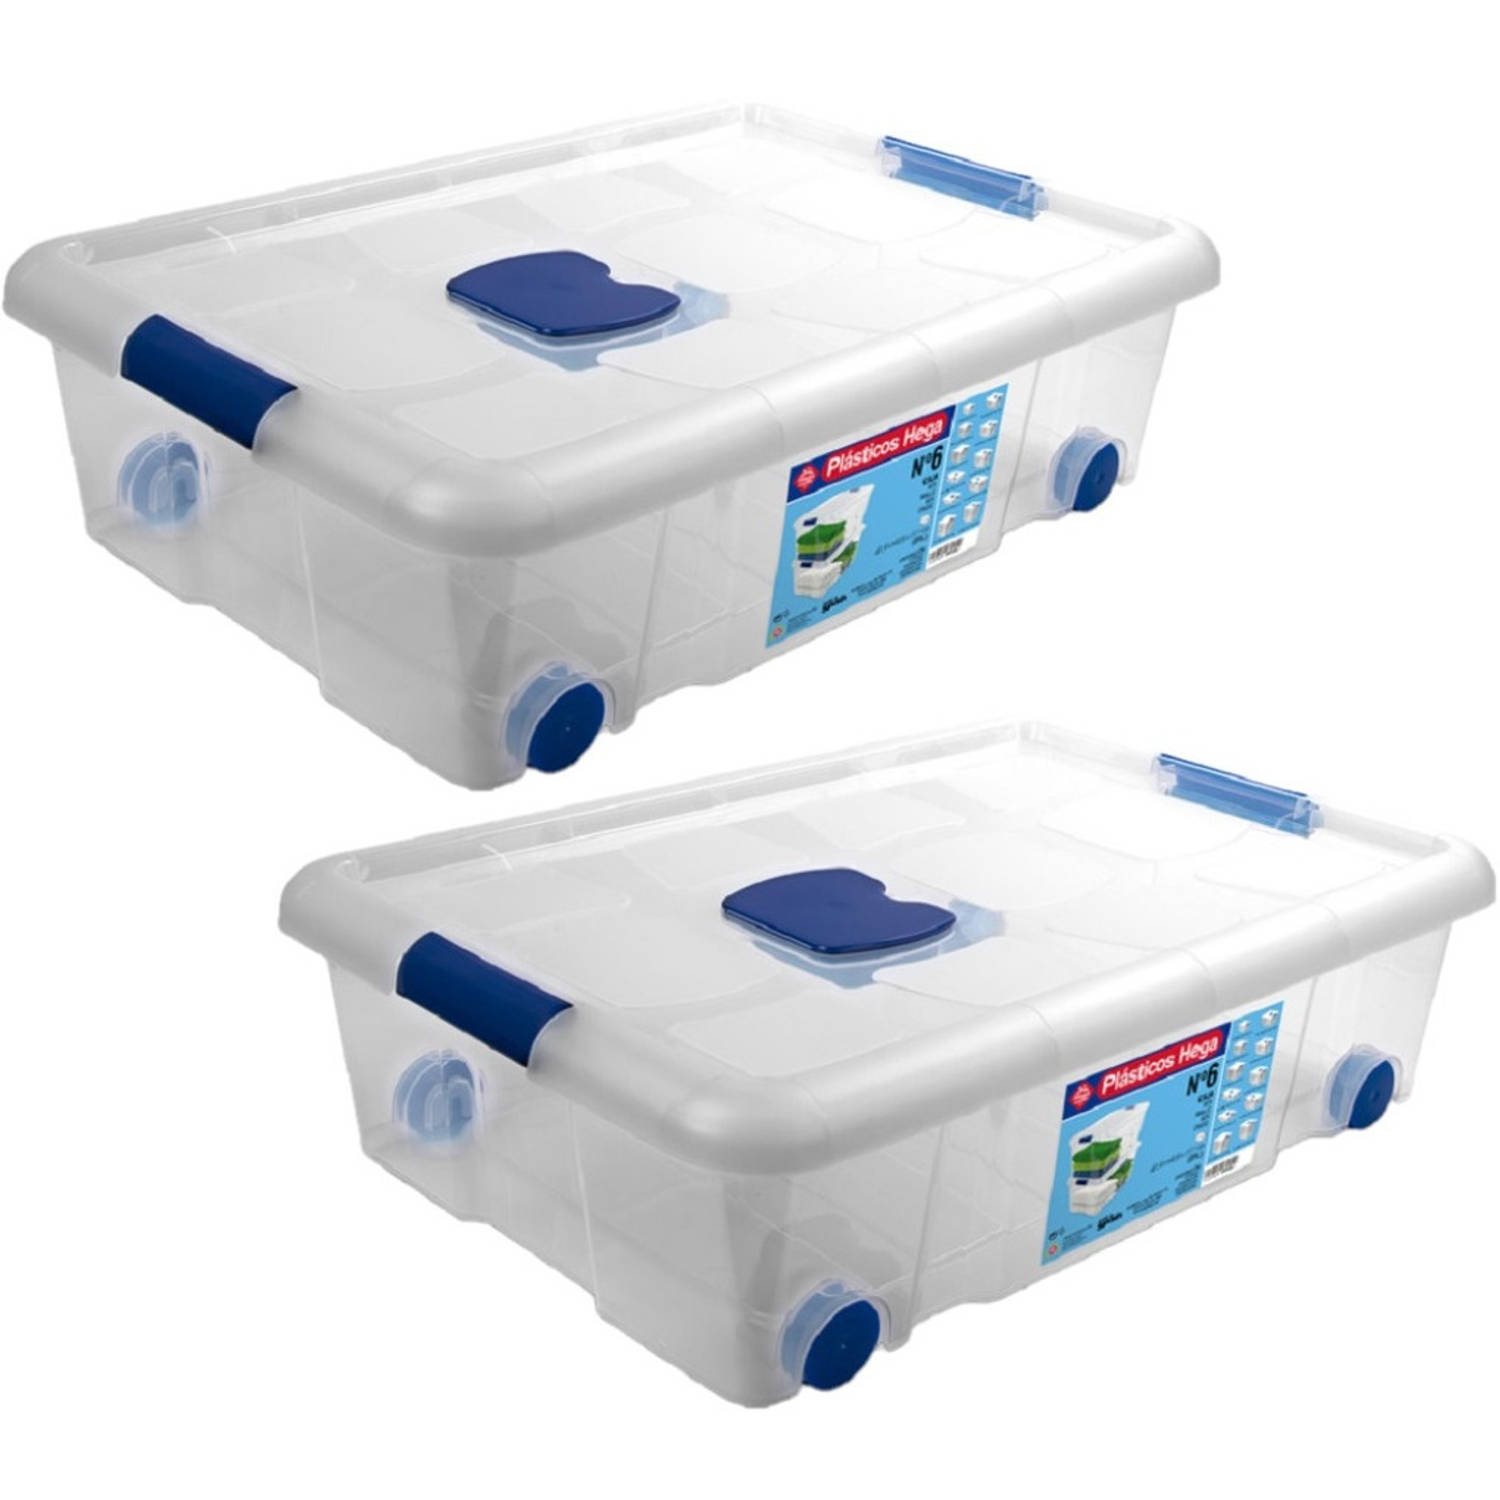 Antipoison Slink rook 1x Opbergboxen/opbergdozen met deksel en wieltjes 31 liter kunststof  transparant/blauw - Opbergbox | Blokker